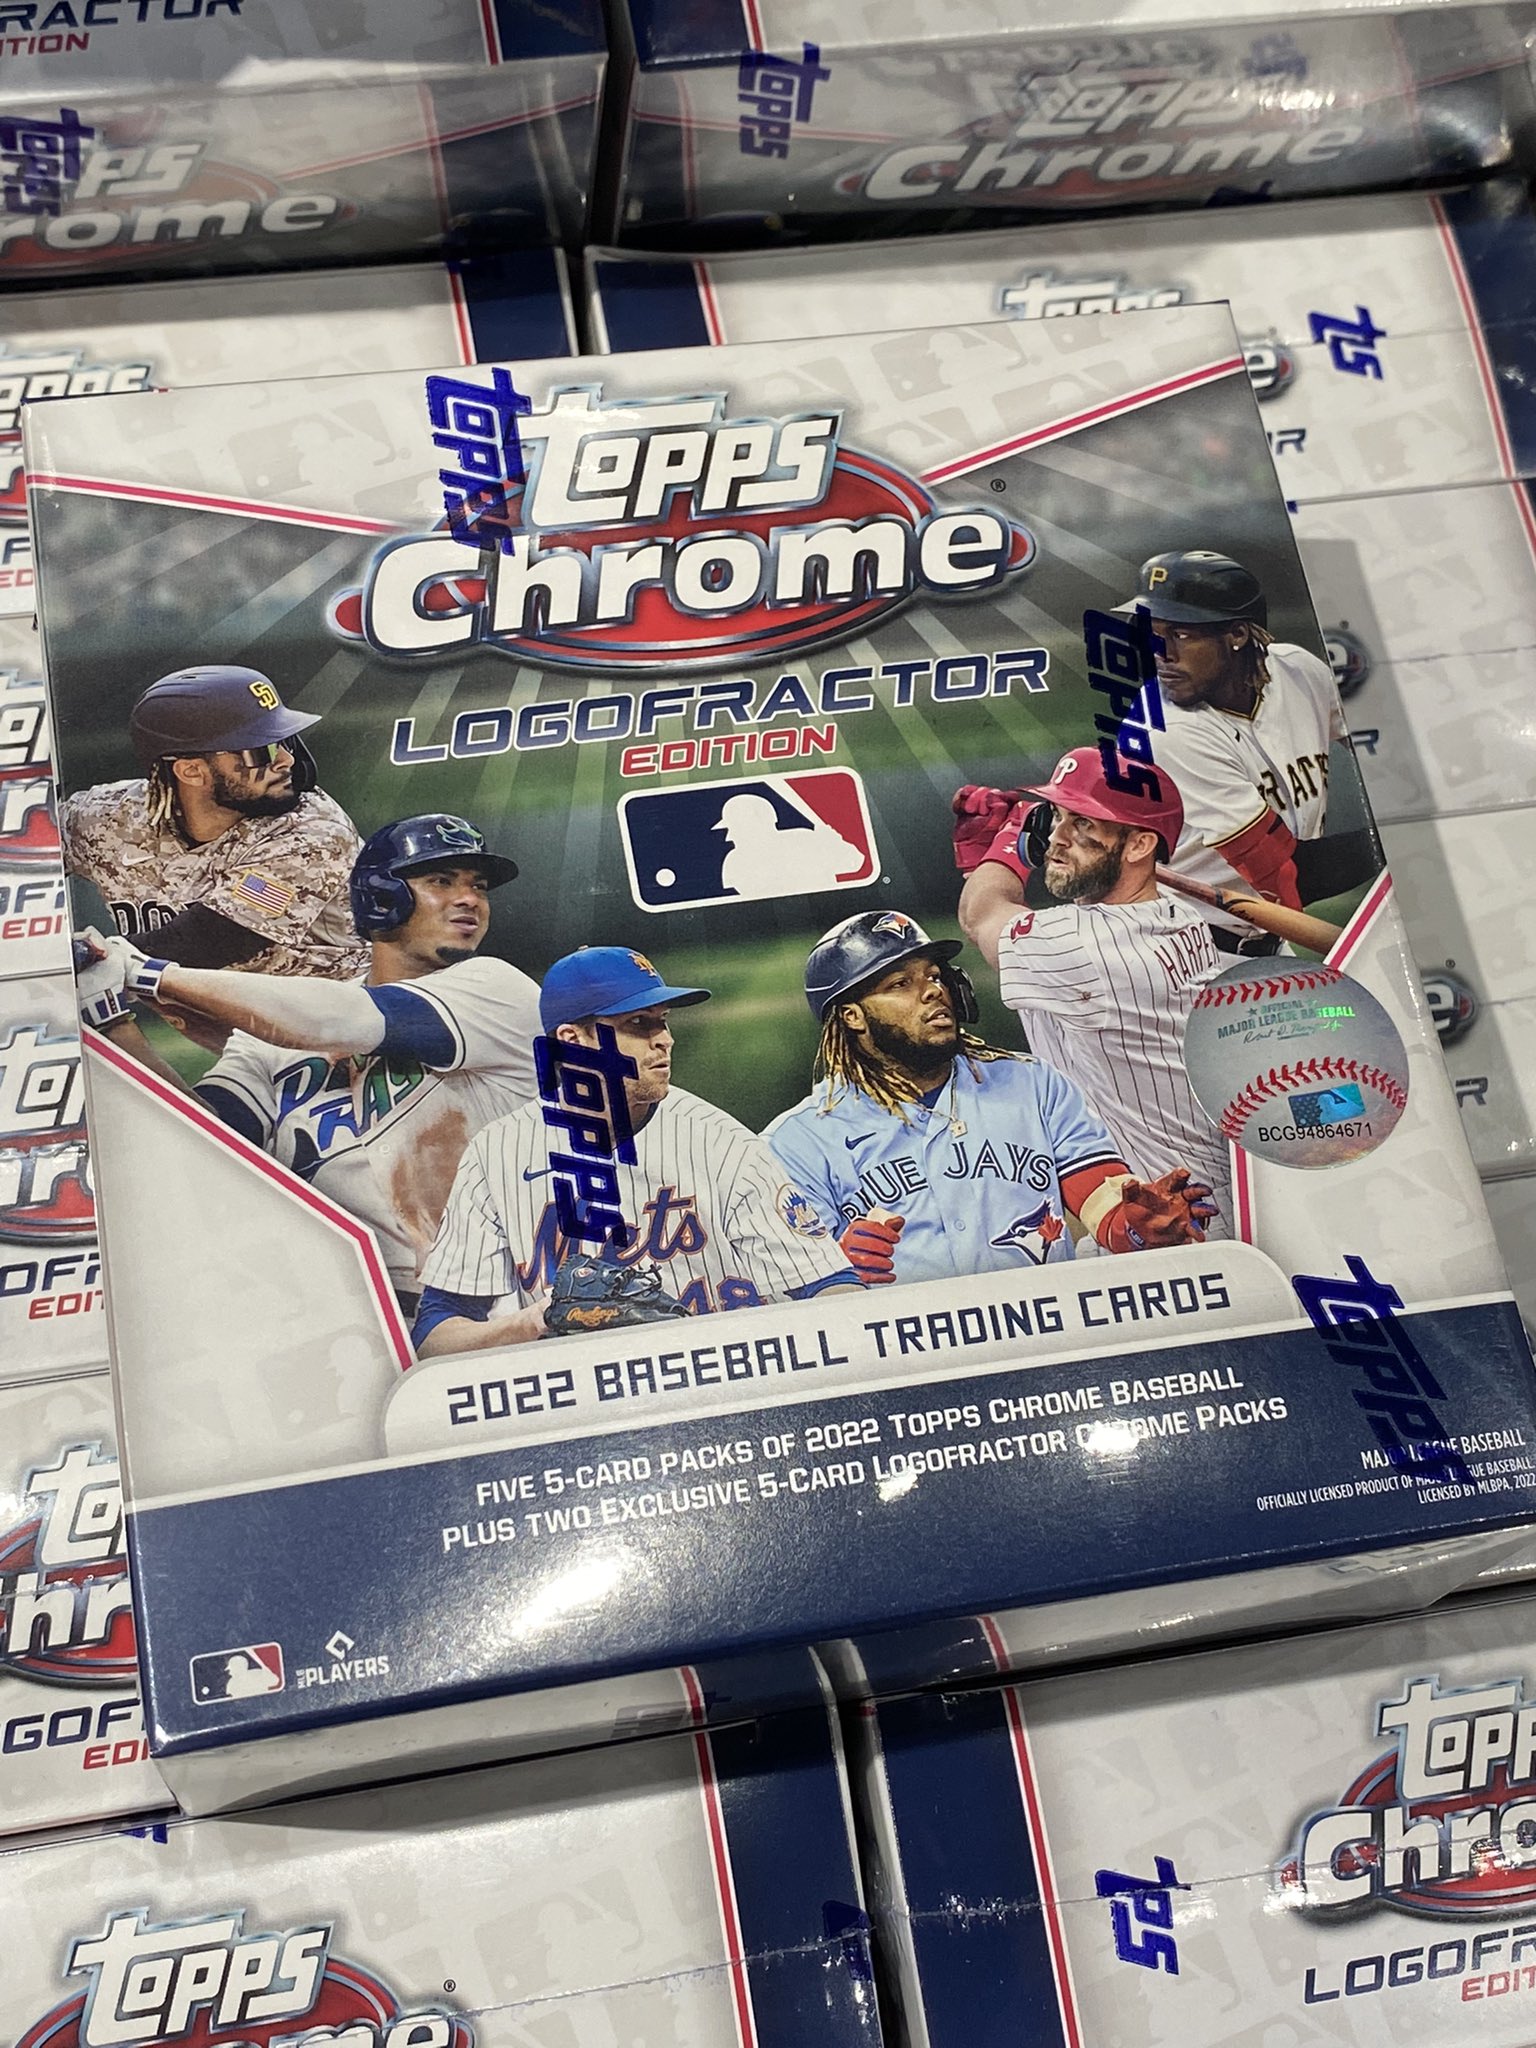 2022 Topps Chrome Logofractor Baseball Checklist and Box Info